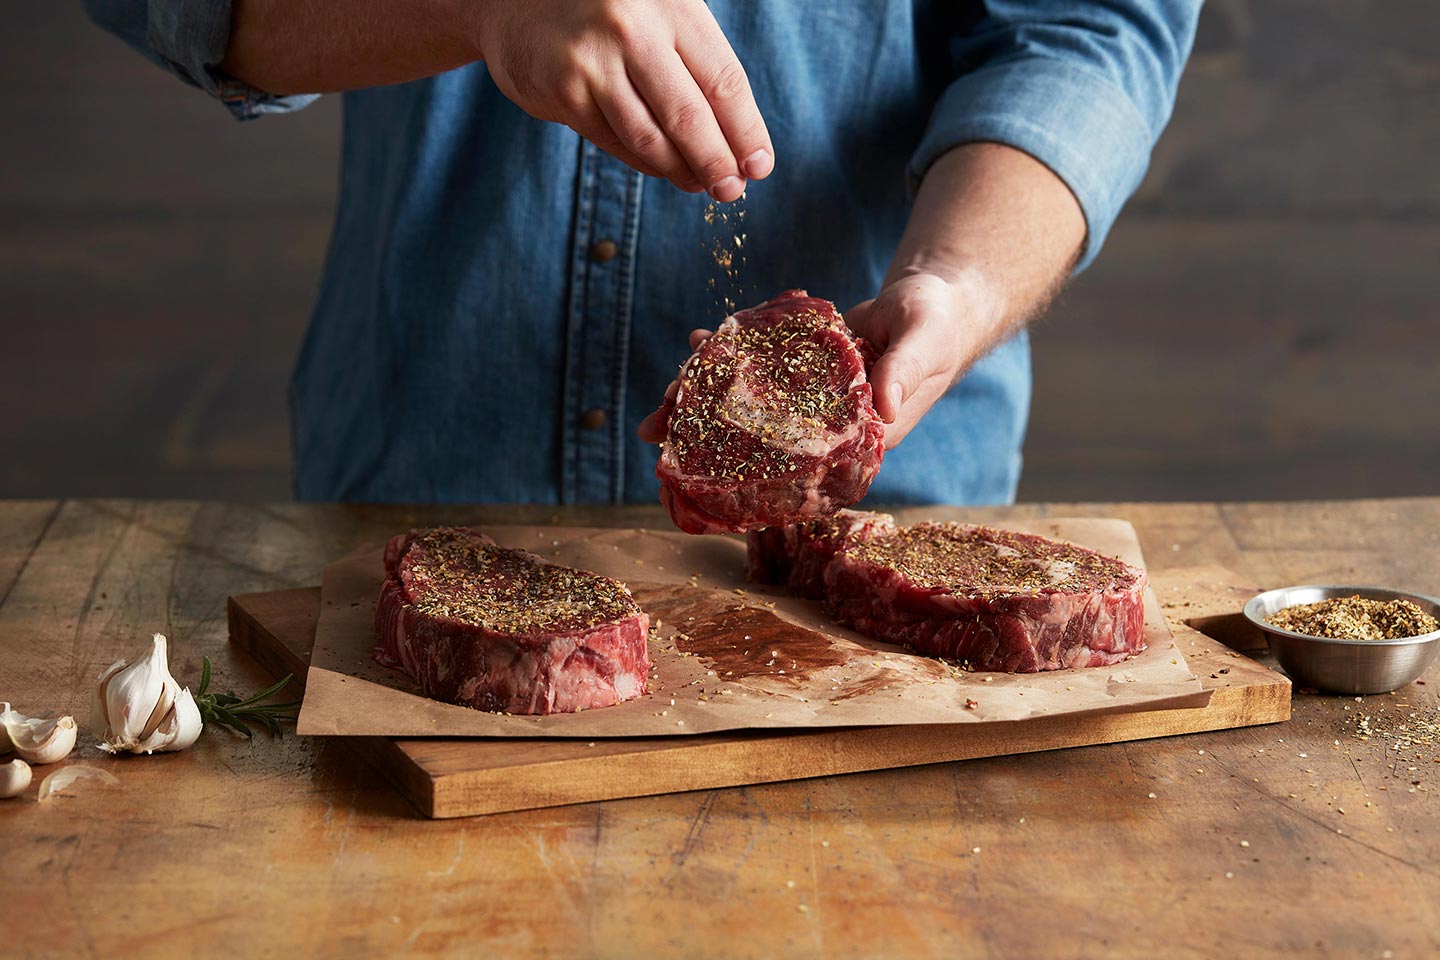 Hand sprinkling Twist'd Q seasoning on steak sitting on cutting board.